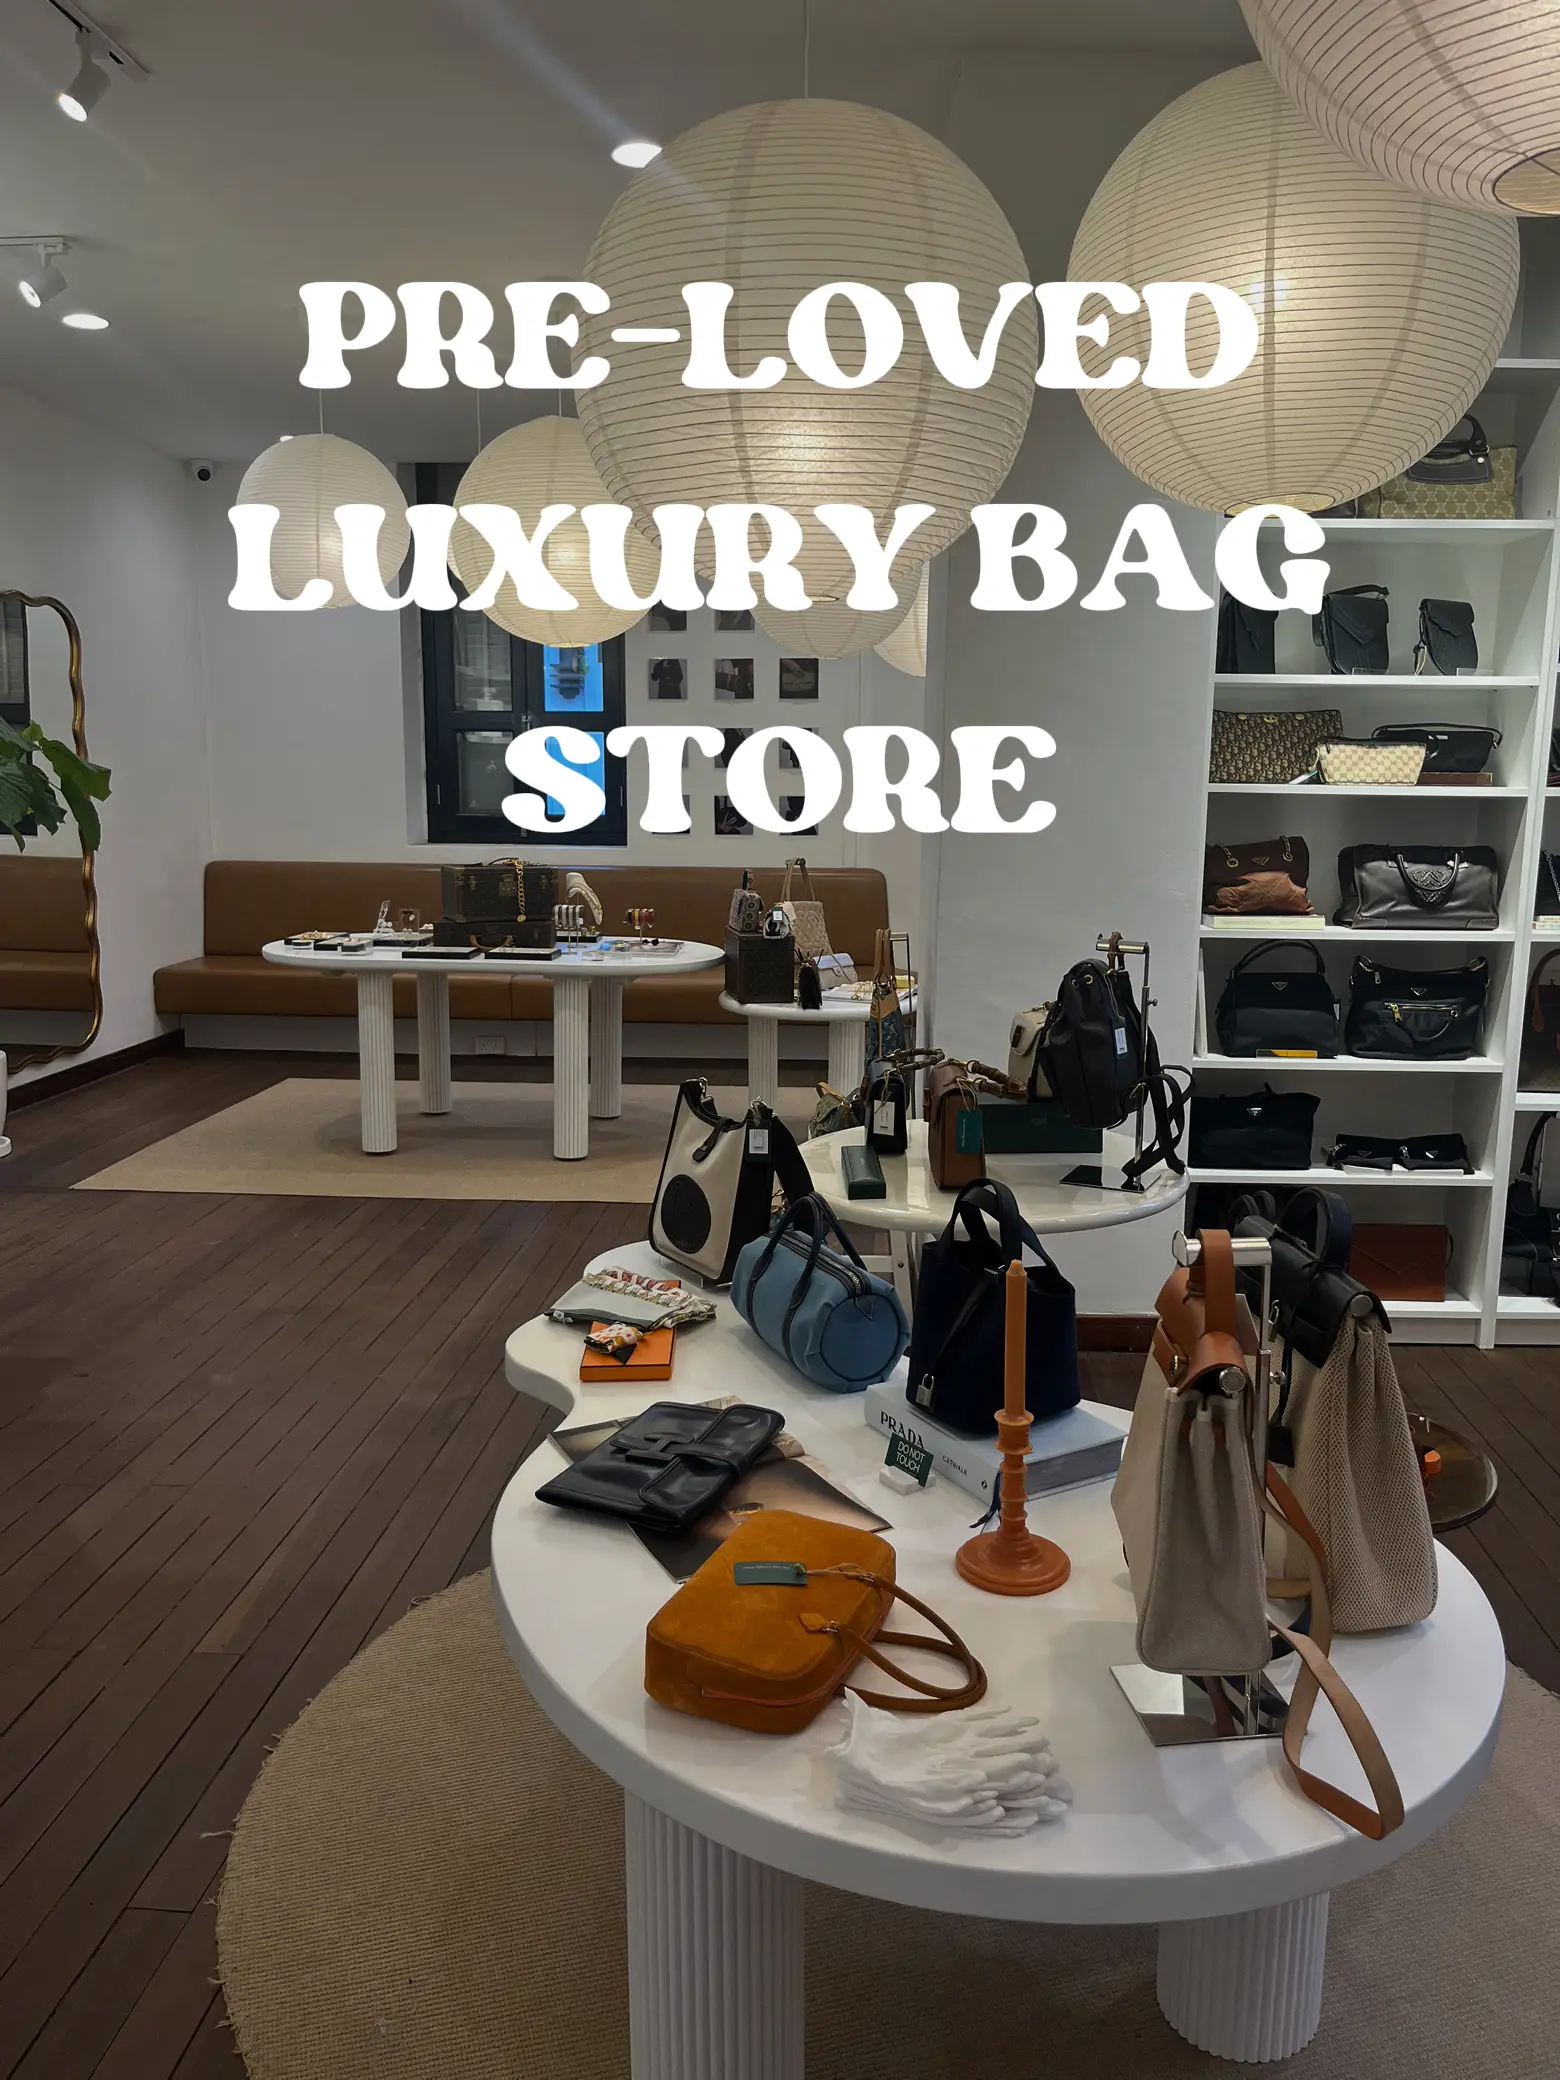 Luxury bags store